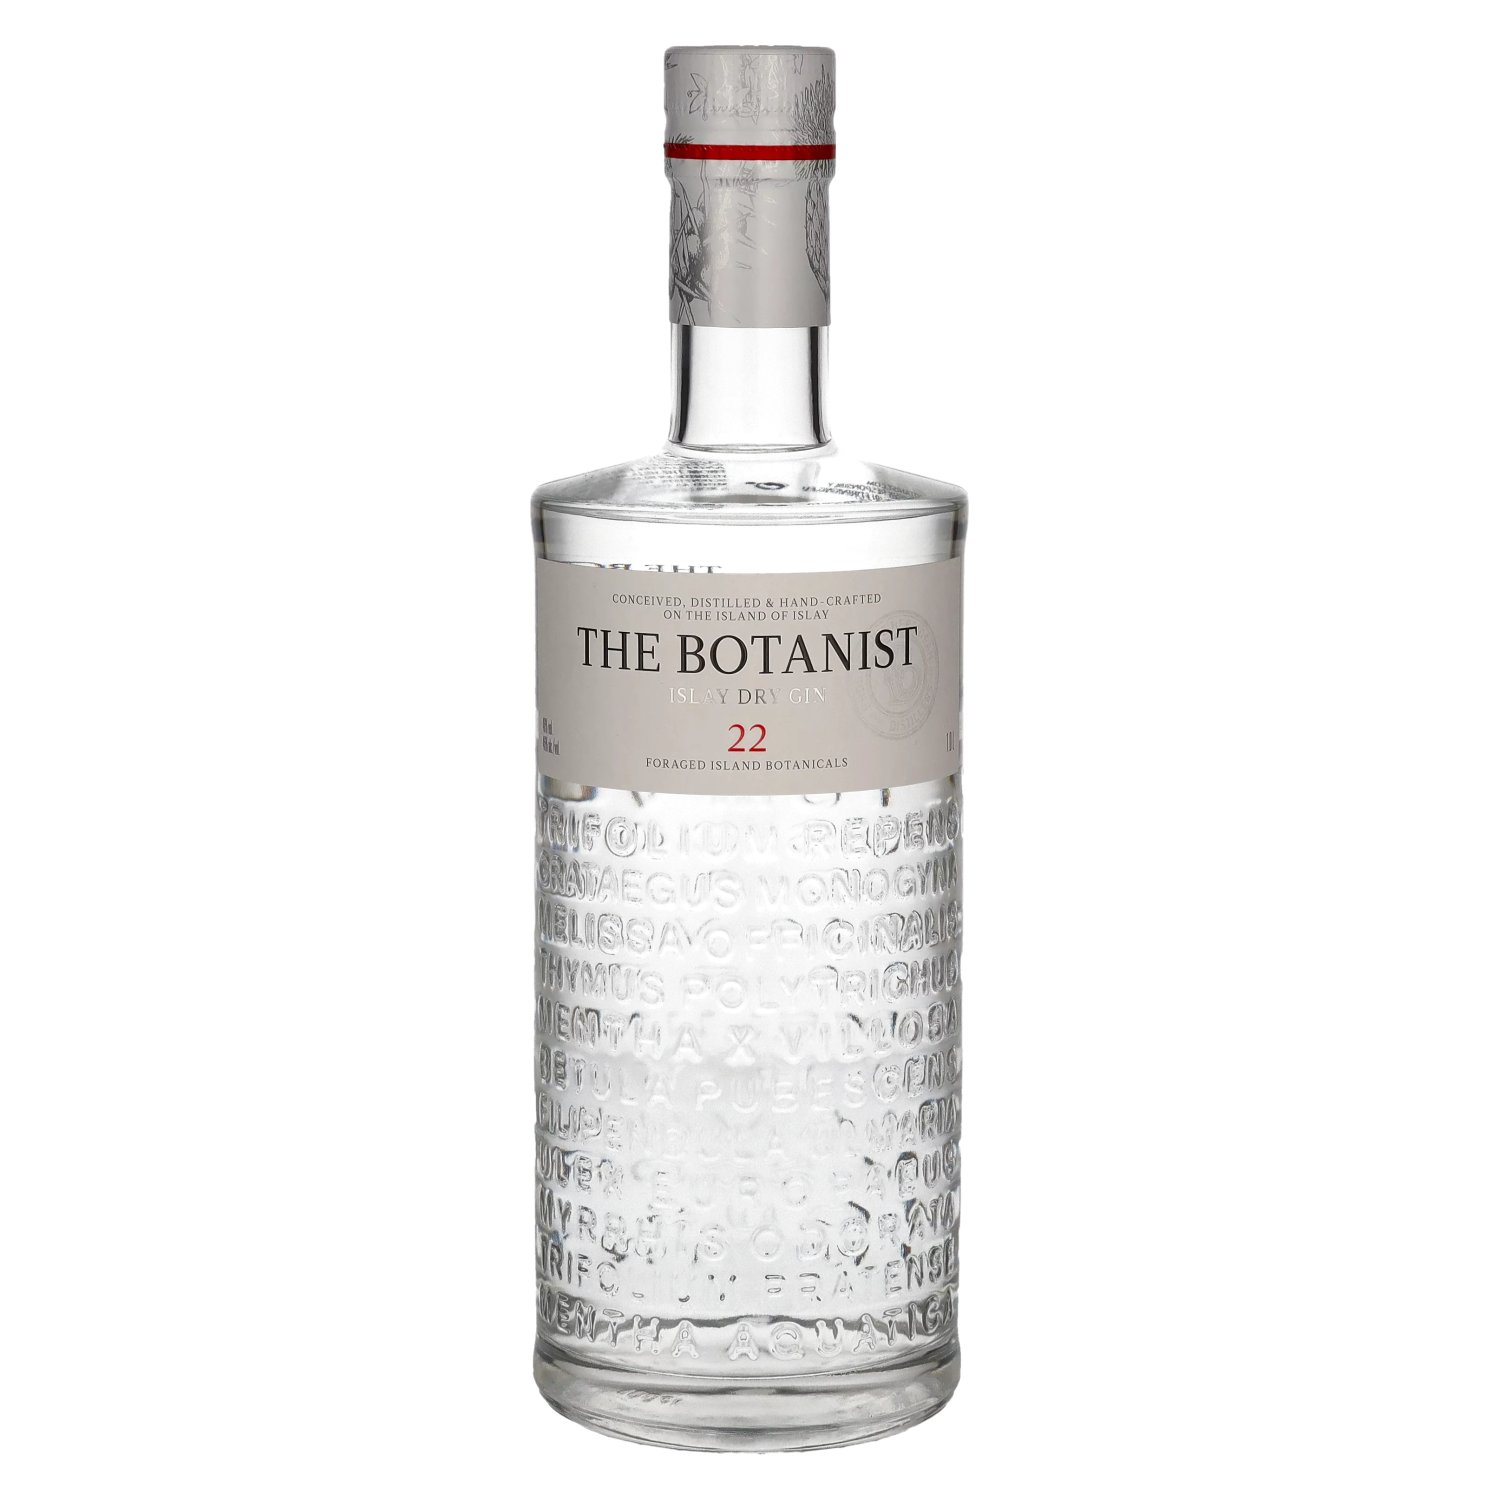 The Botanist Islay Dry Gin 46% Vol. 1l - delicando